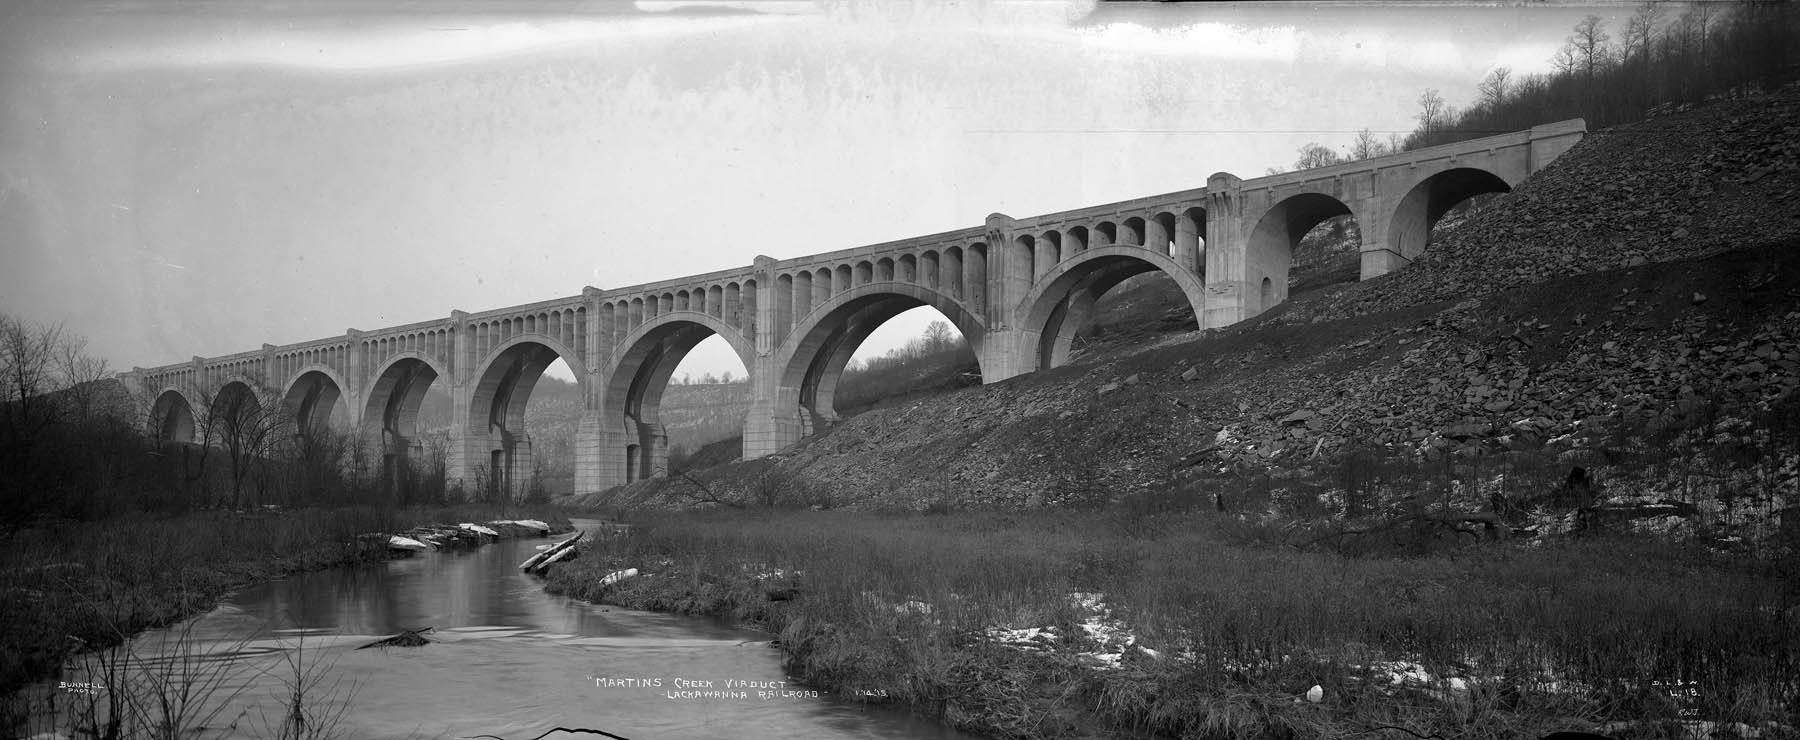 Martin's Creek Viaduct, Lackawanna Railroad
Delaware, Lackawanna, and Western Railroad Company